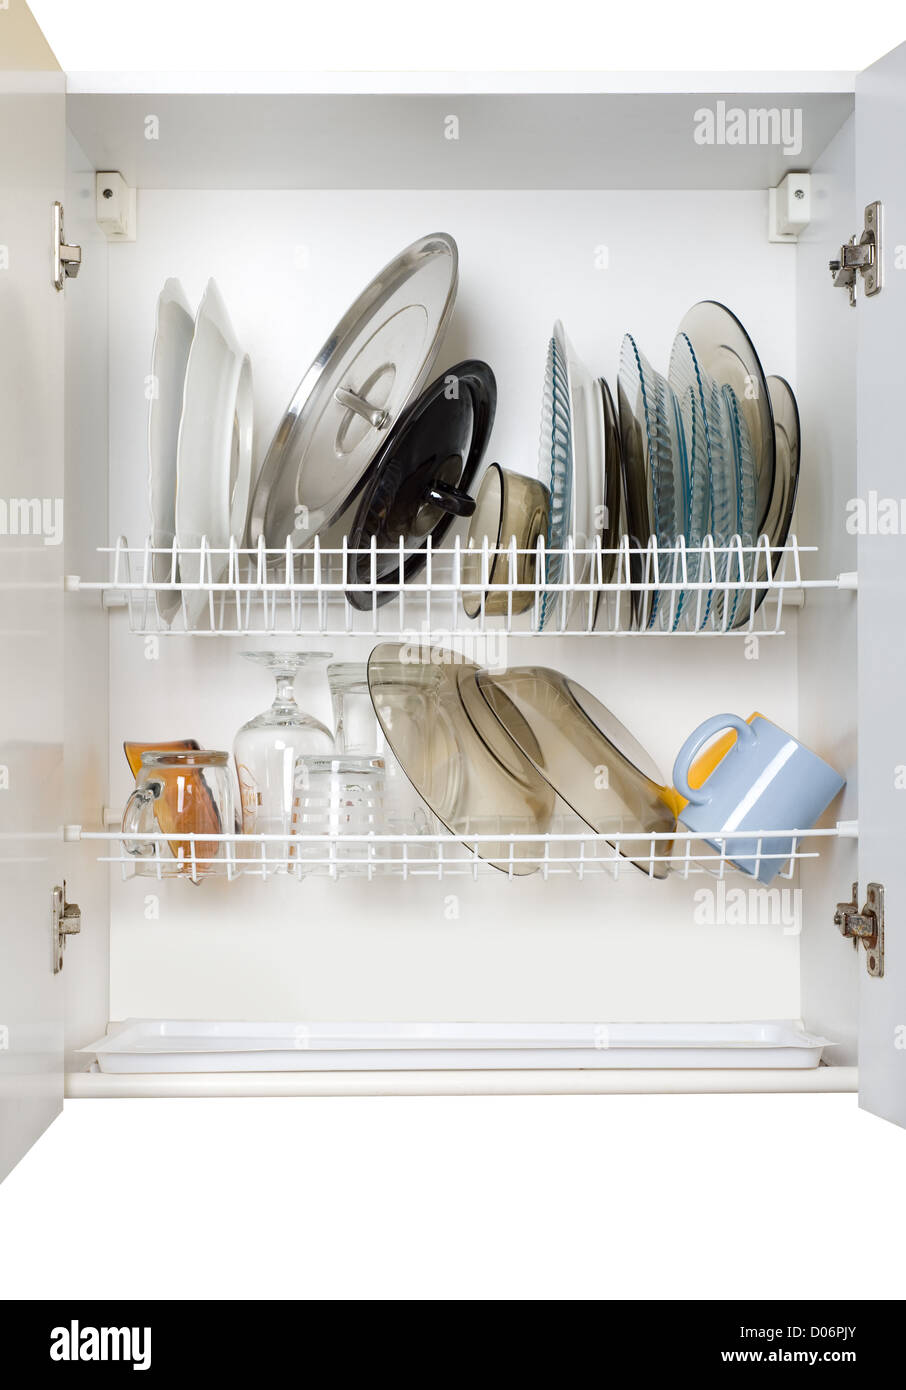 https://c8.alamy.com/comp/D06PJY/white-dish-draining-closet-with-wet-dishes-D06PJY.jpg